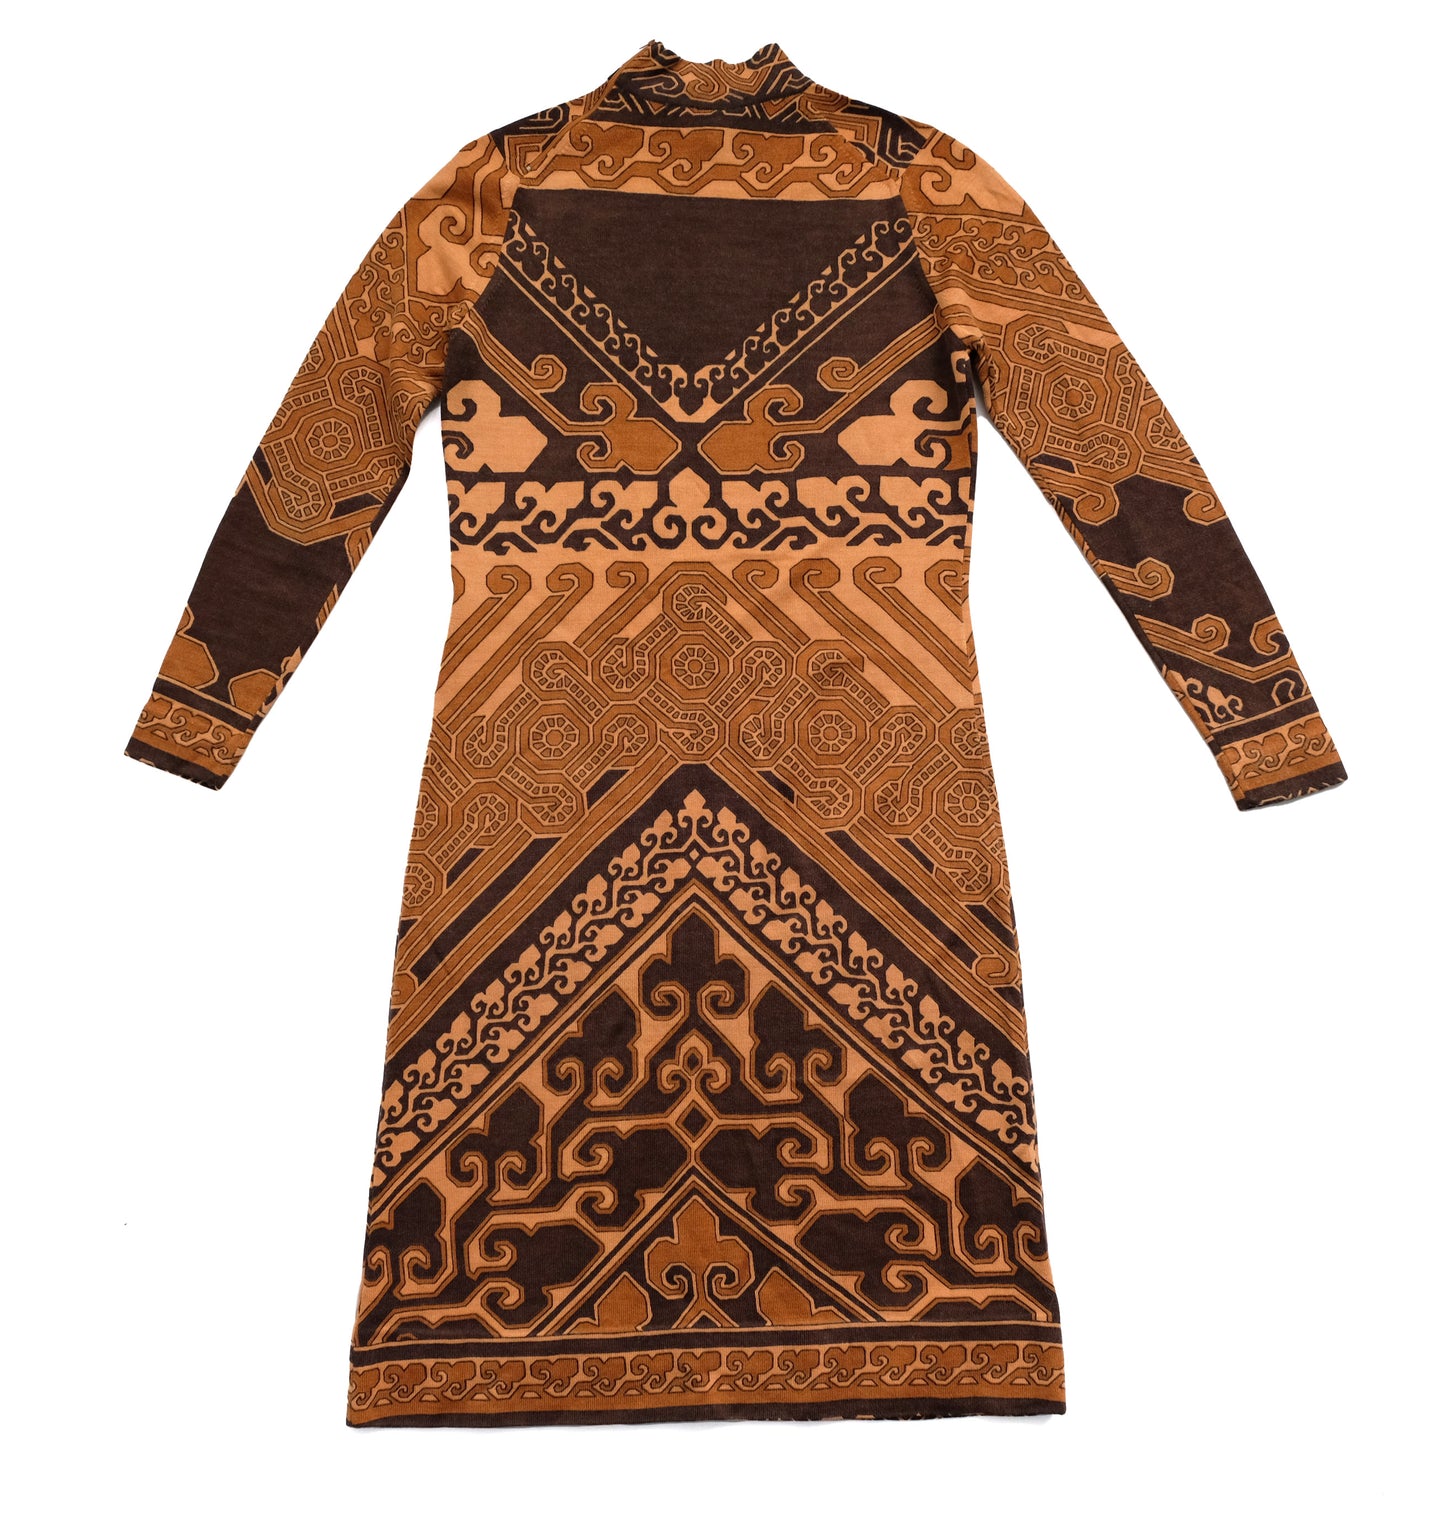 1970s Vintage Brown Geometric Jersey Dress, possibly Leonard Paris